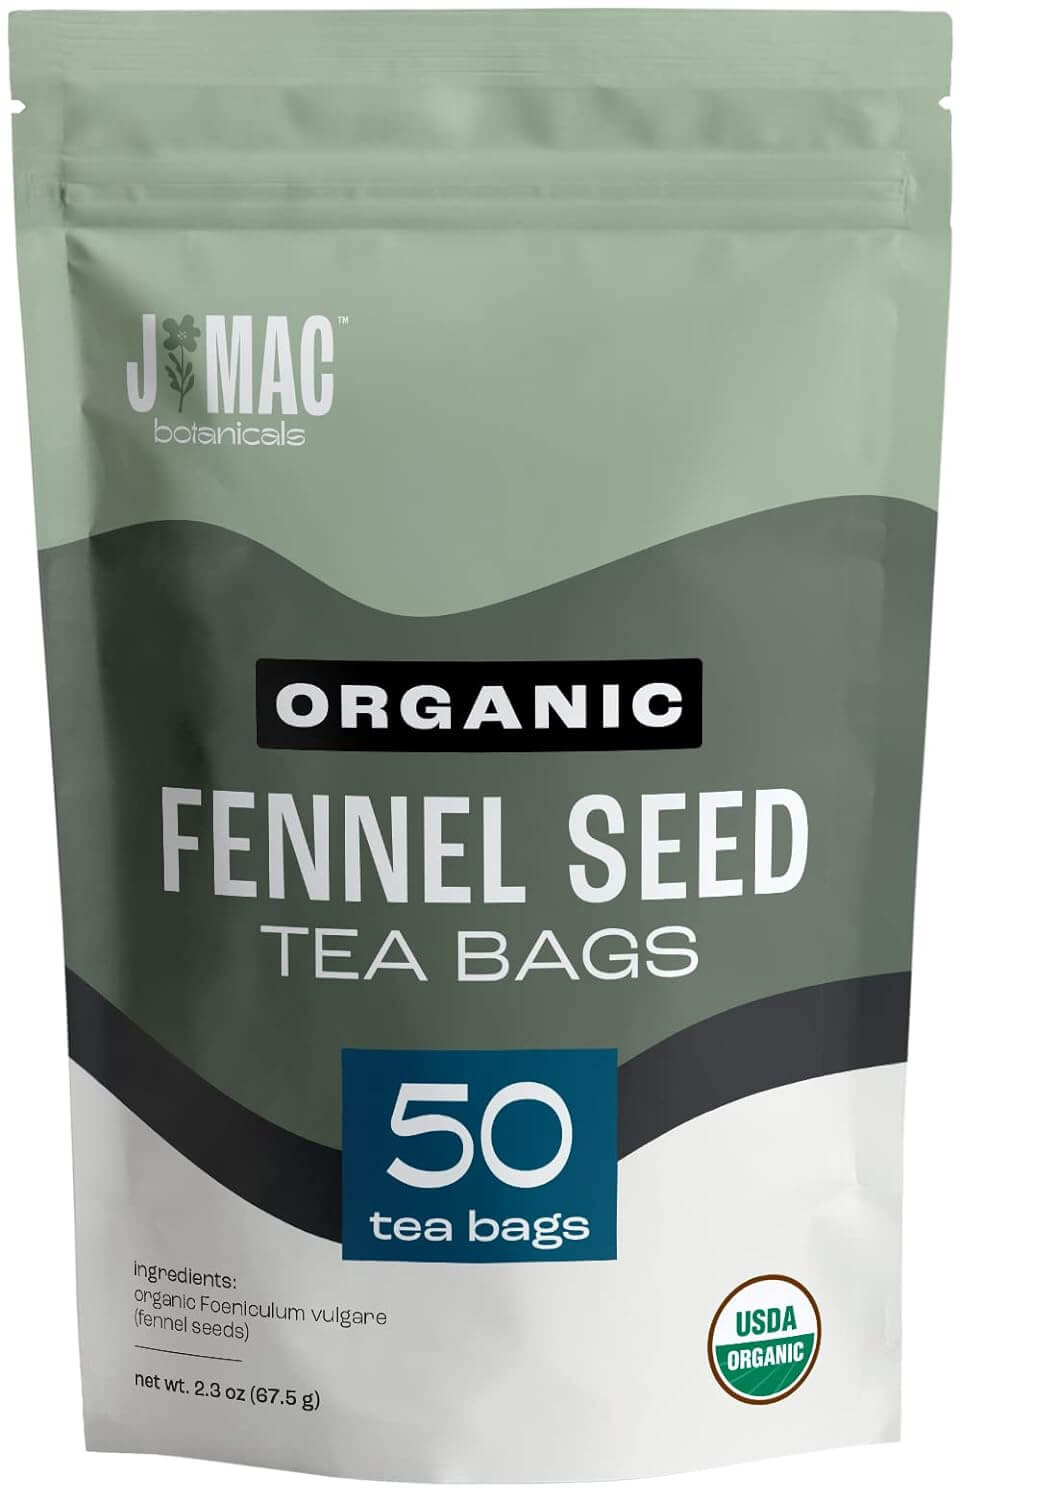 J MAC BOTANICALS Organic Fennel Seed Tea Bags